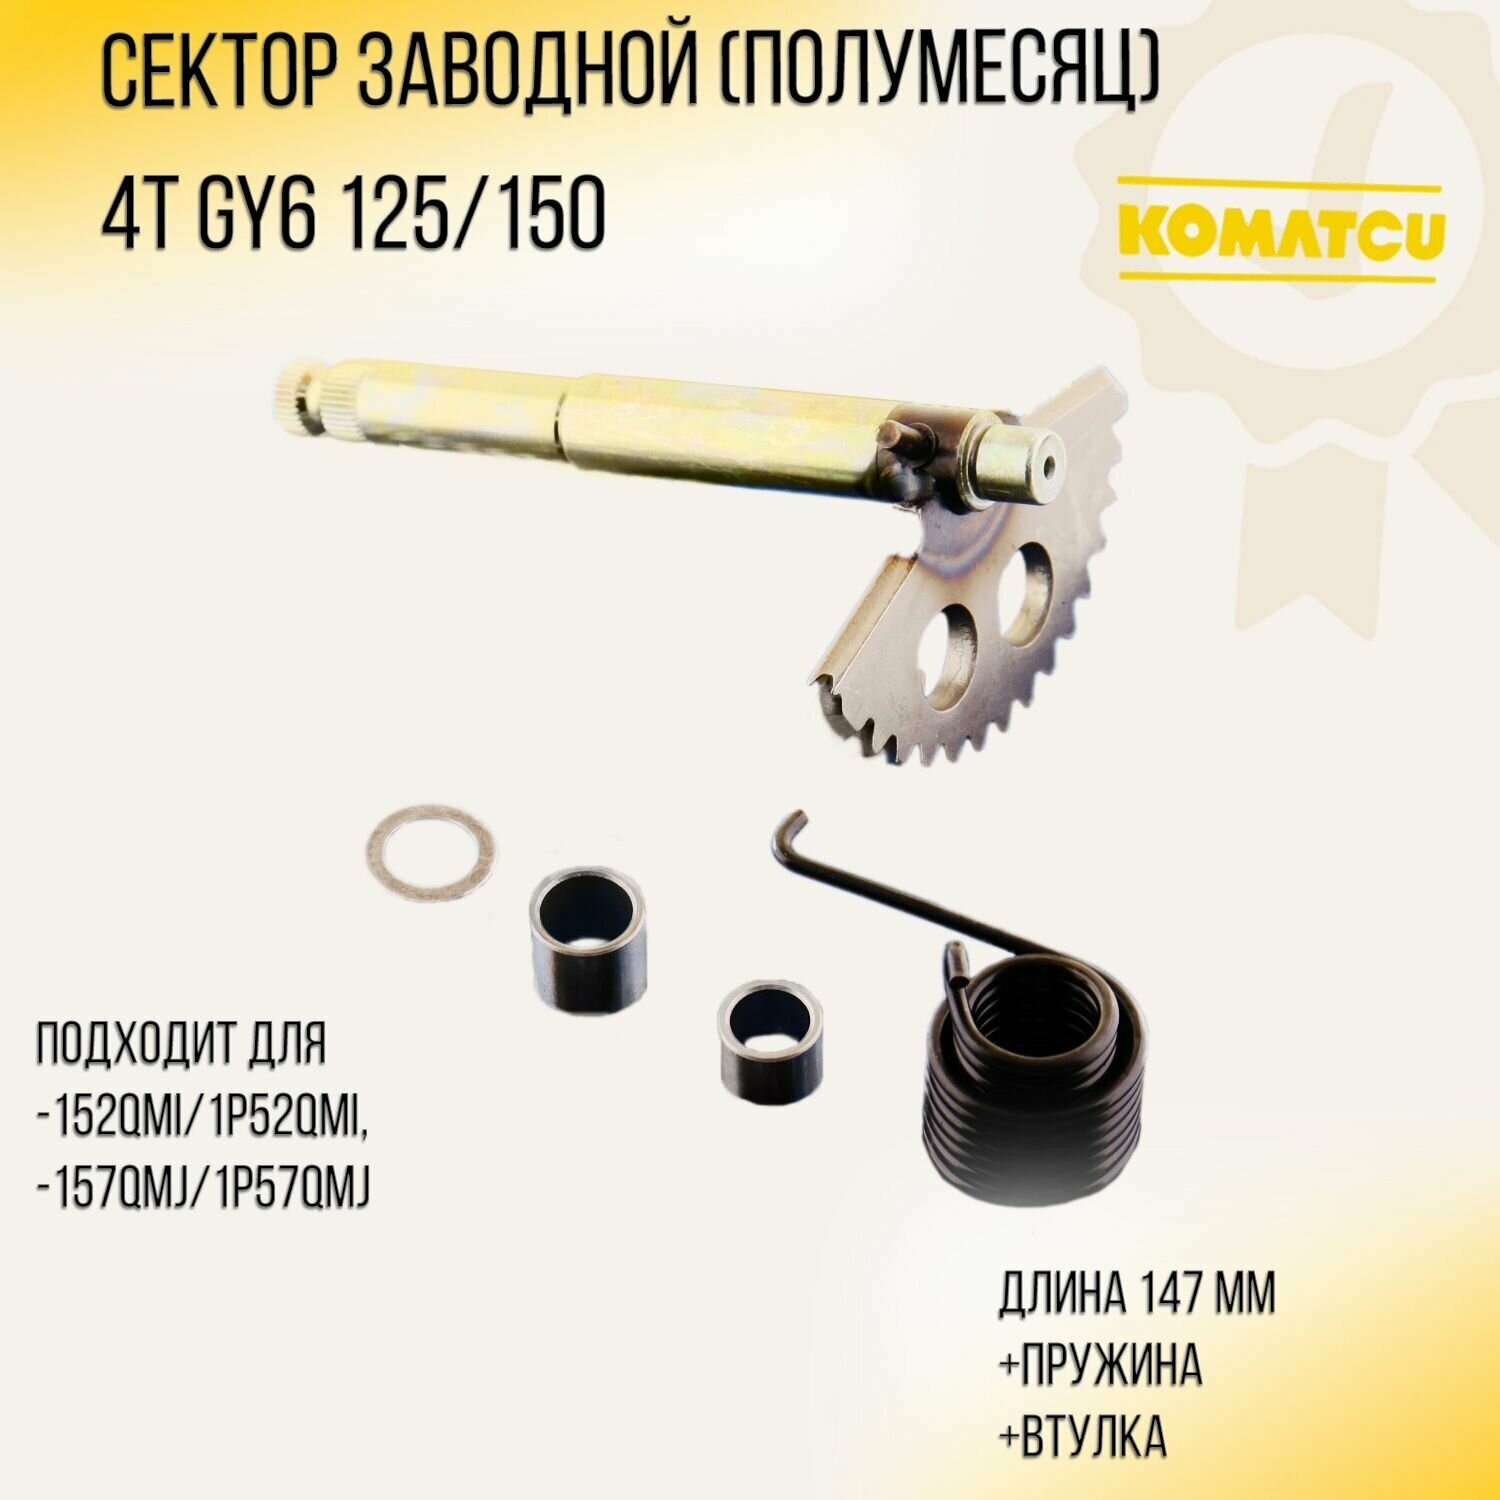 Сектор заводной (полумесяц) 4T GY6 125/150 (L-147mm) (+пружина, втулка) (152QMI/157QMJ) "KOMATCU"